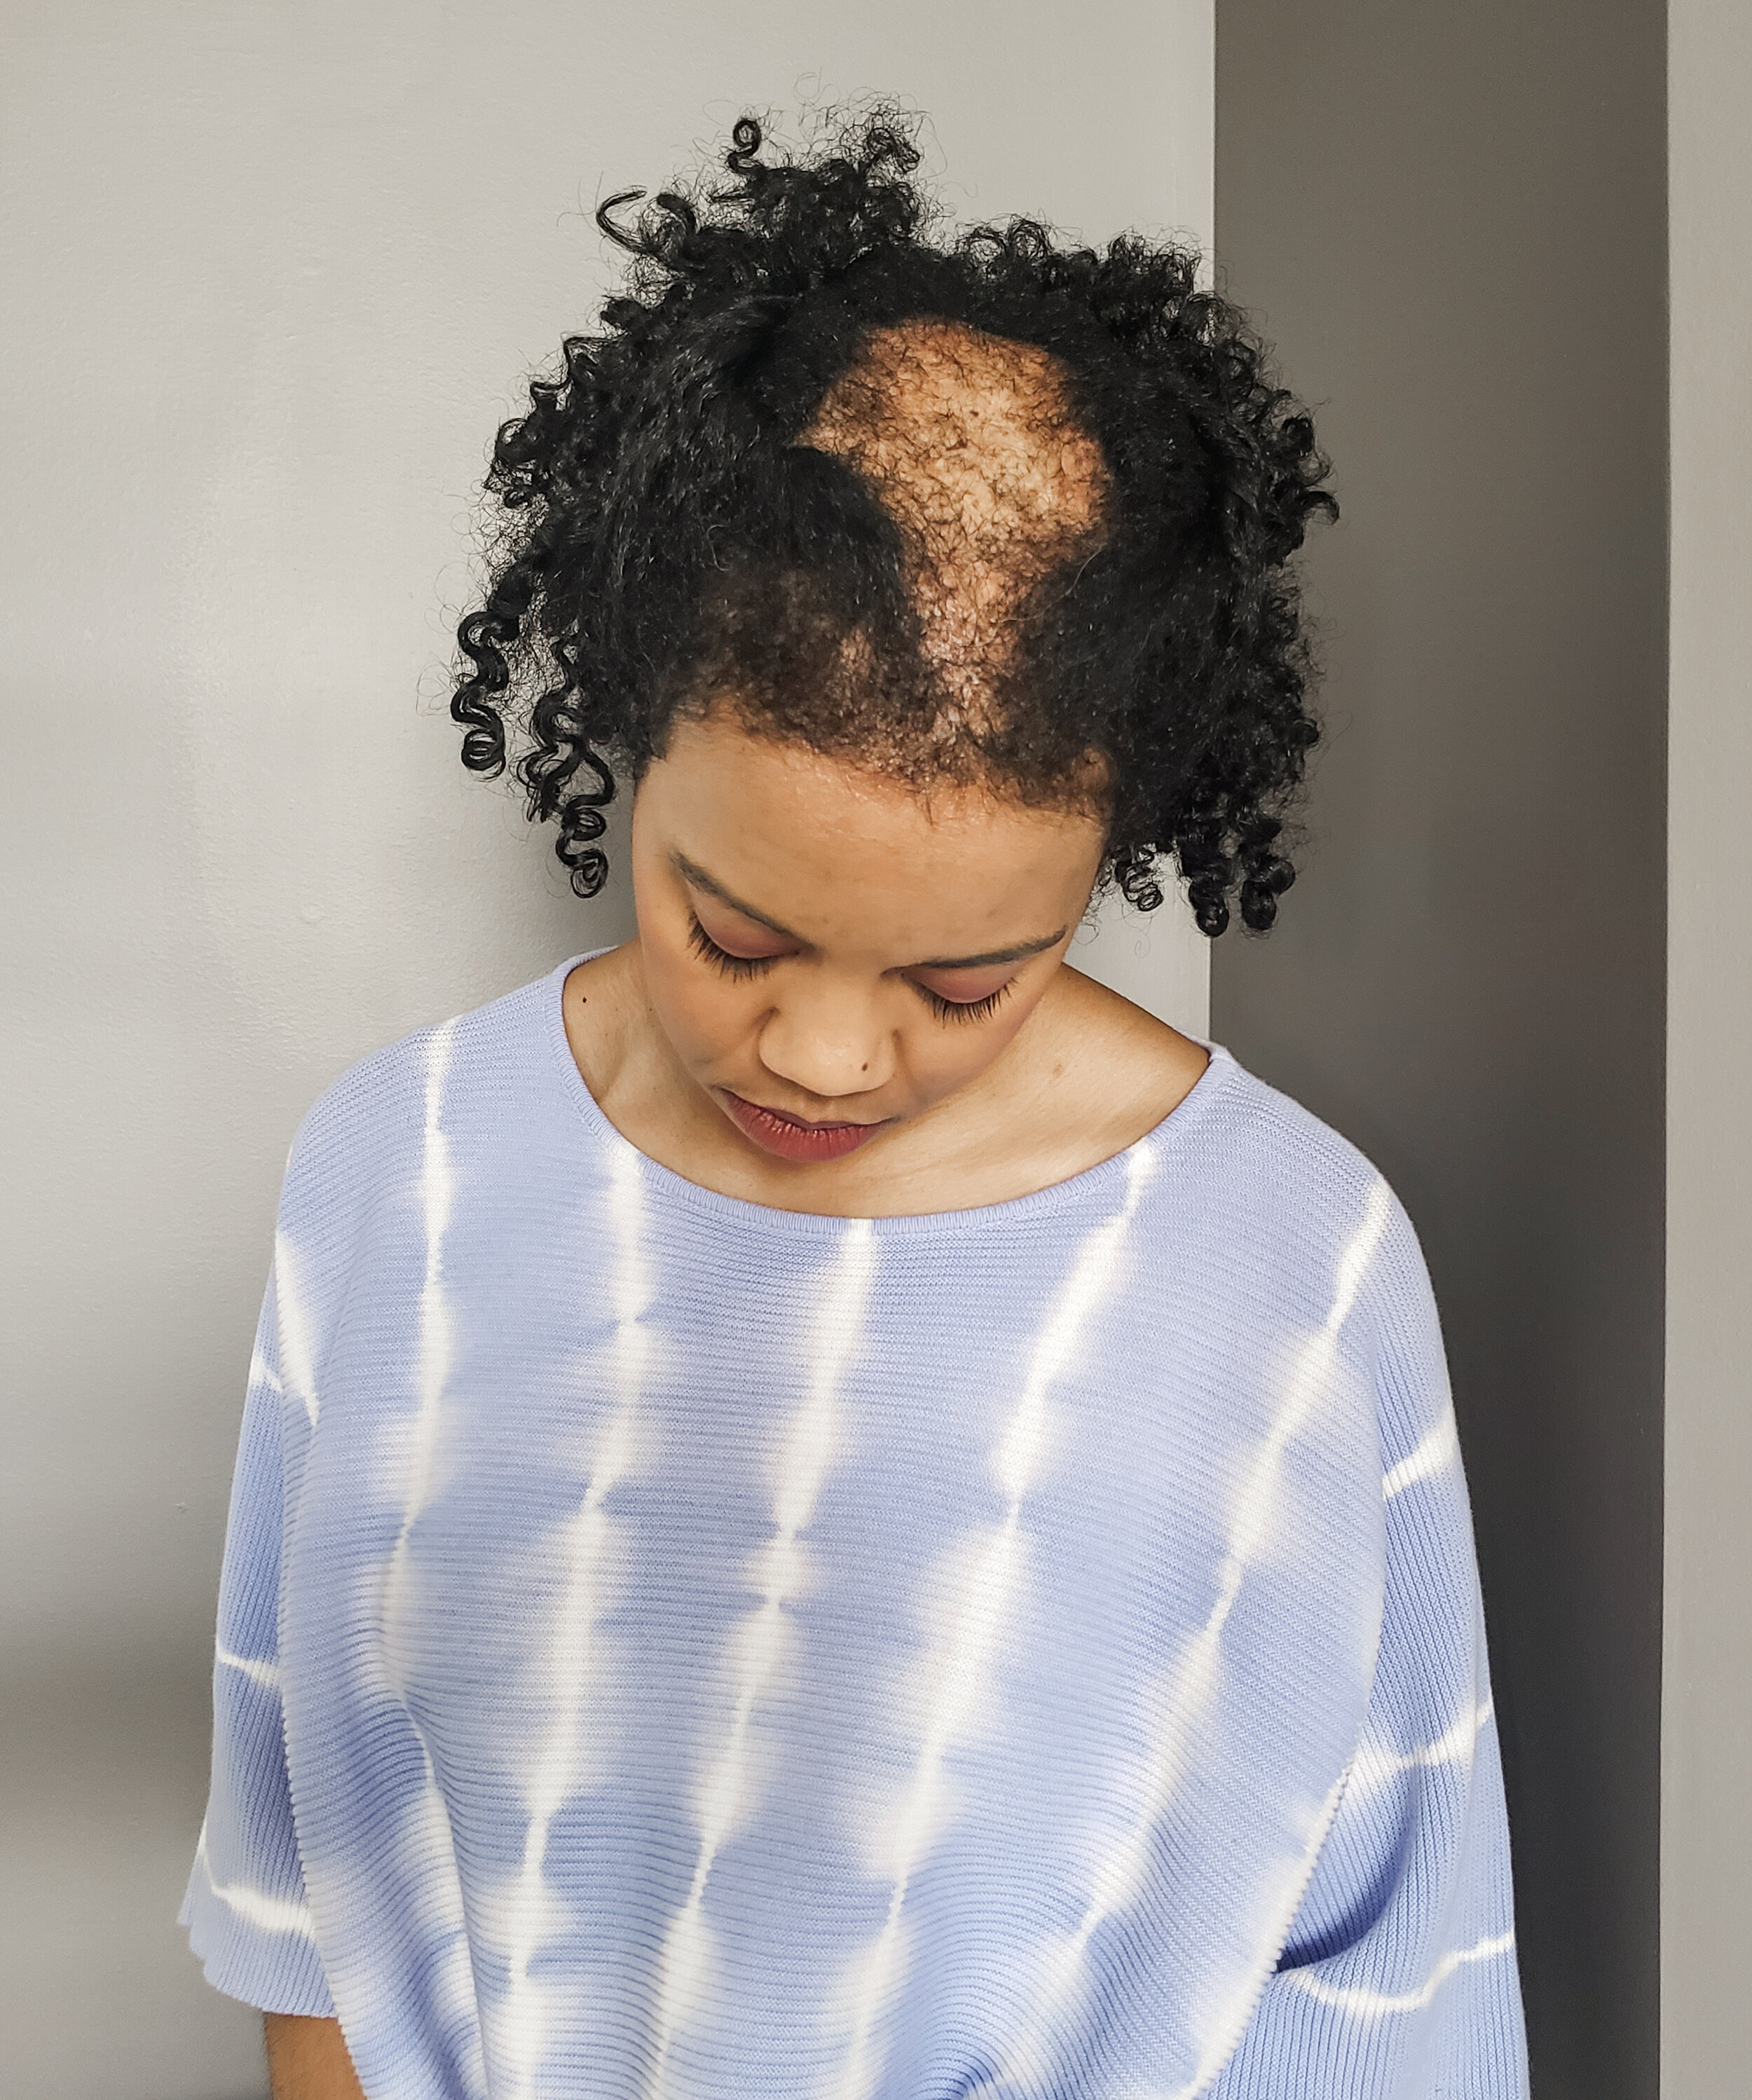 Scarring Alopecia Chronic Hair Loss Is Prevalent Amongst Black Women Nola Johnson Shares How Her Hair Loss Journey Led Her To Homeopathic Healthcare Melaninass Com